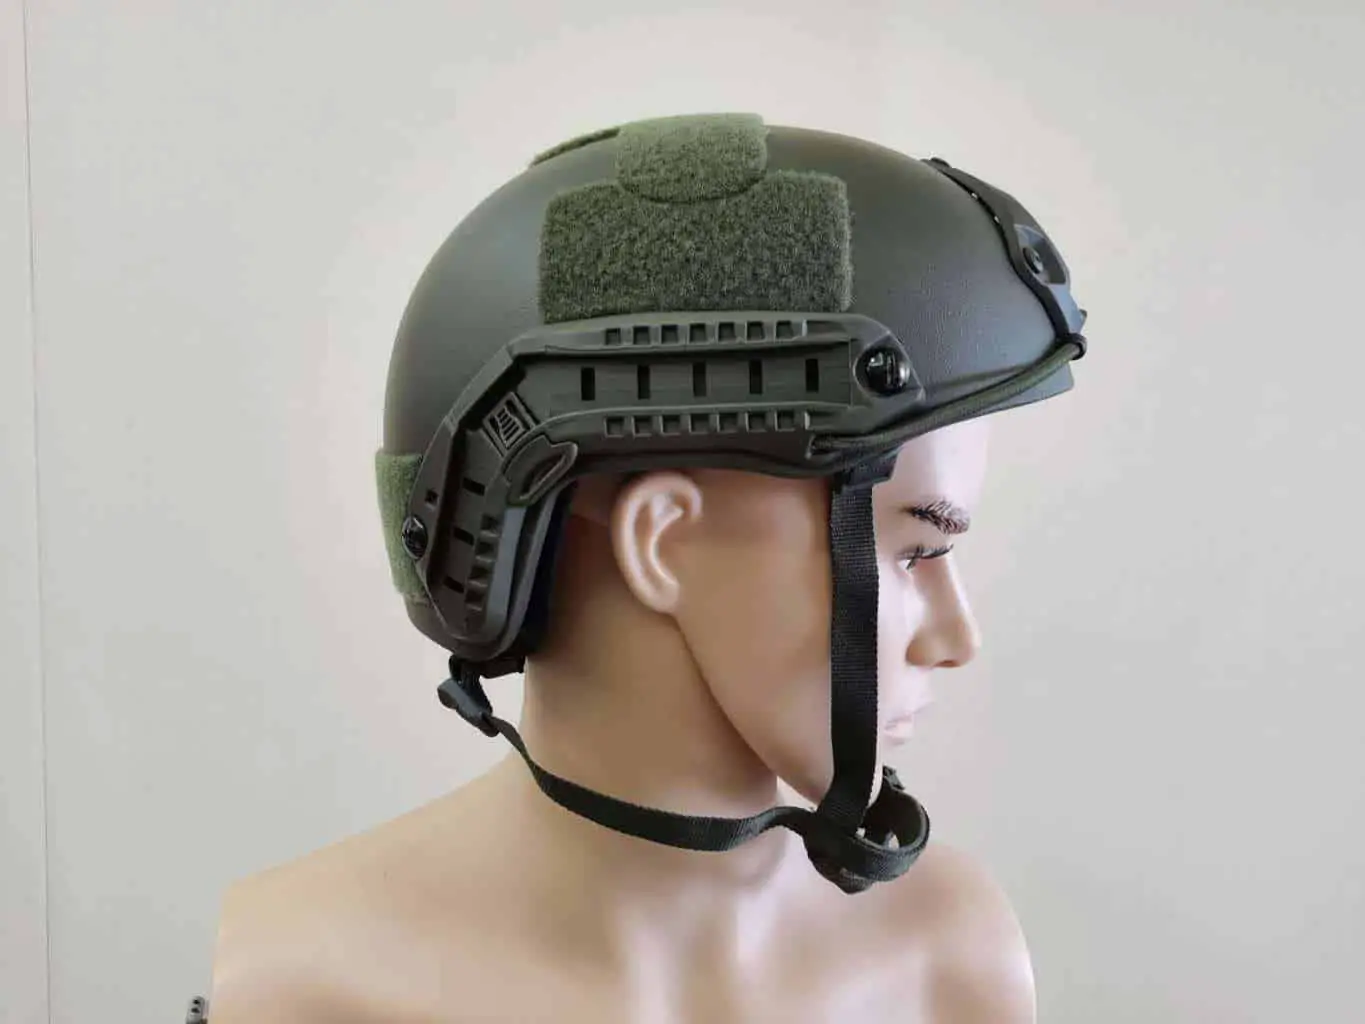 A typical police & military bulletproof helmet